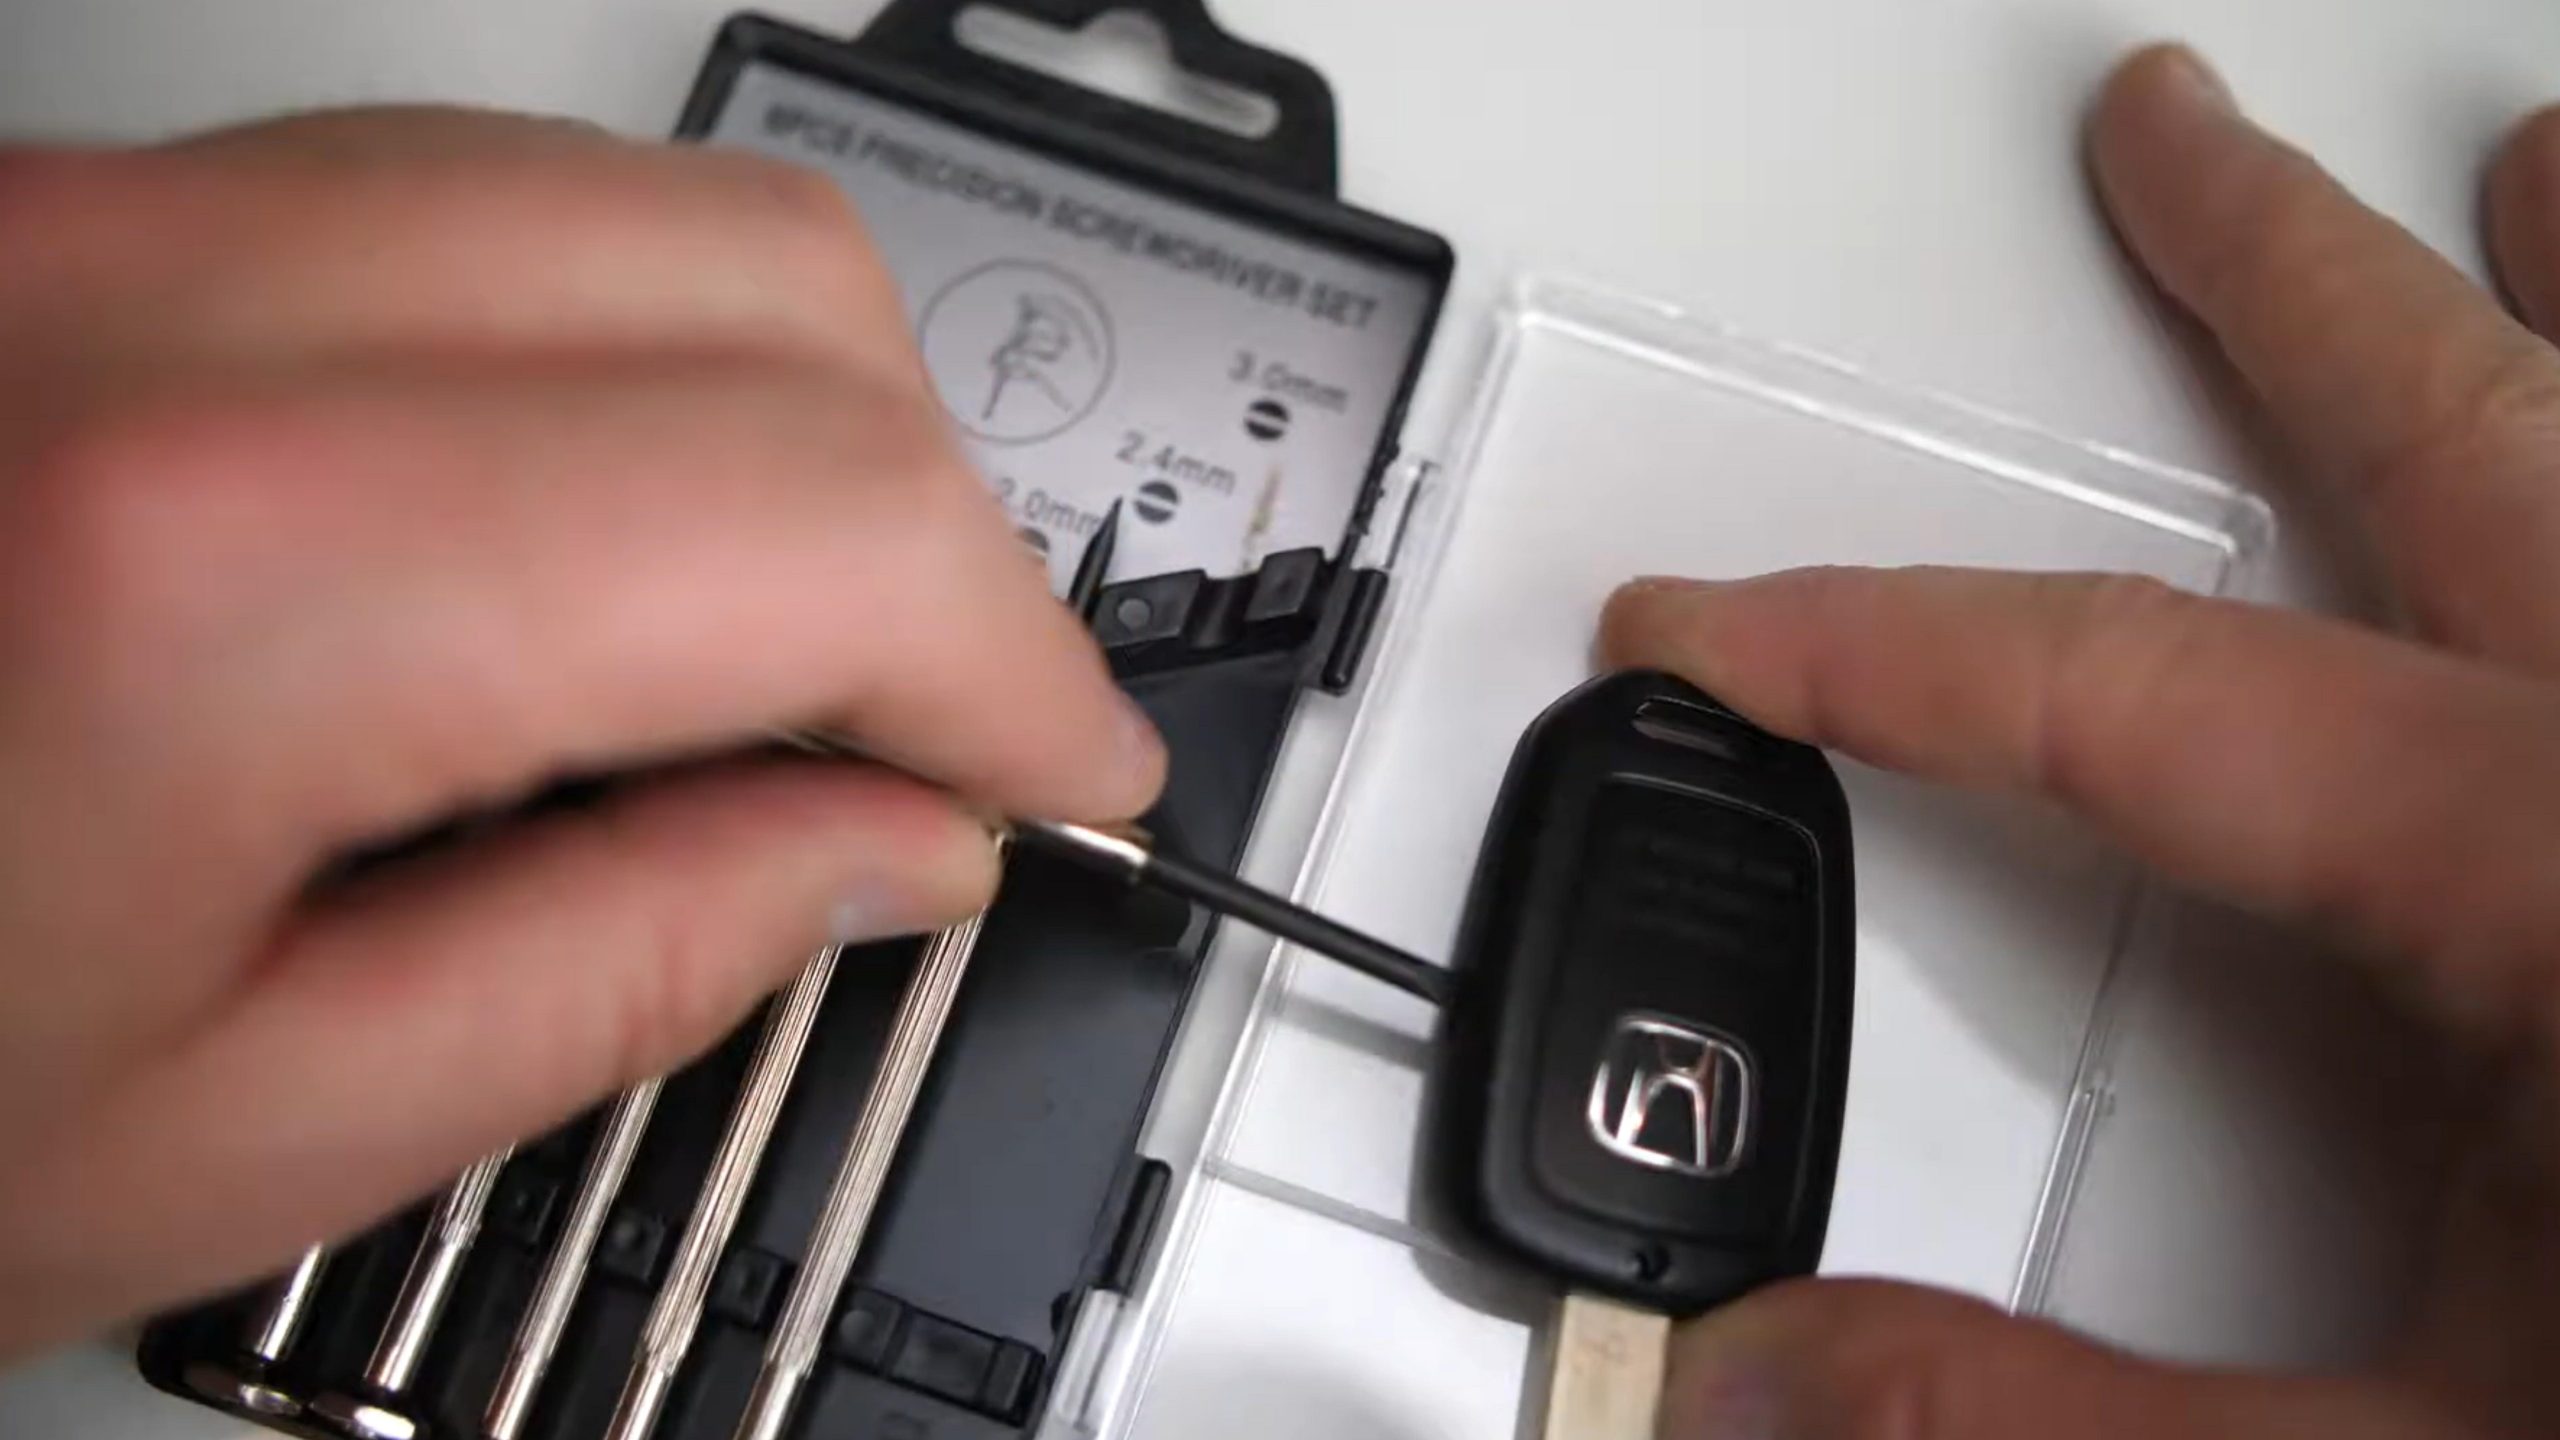 Honda Key Fob Battery Drain Issues